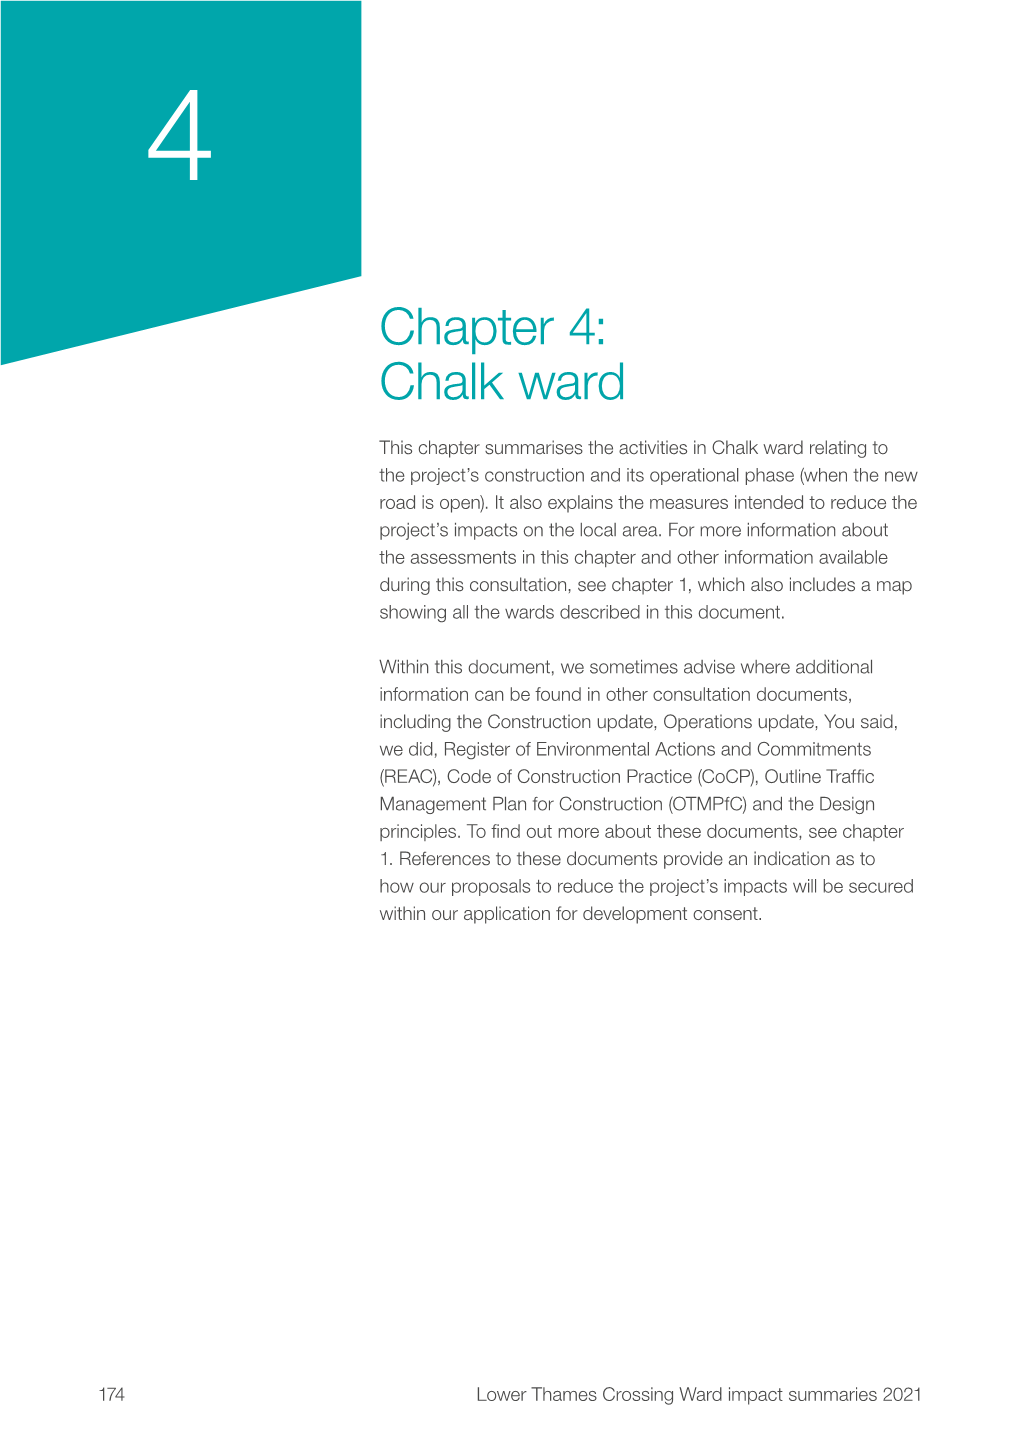 Chapter 4: Chalk Ward